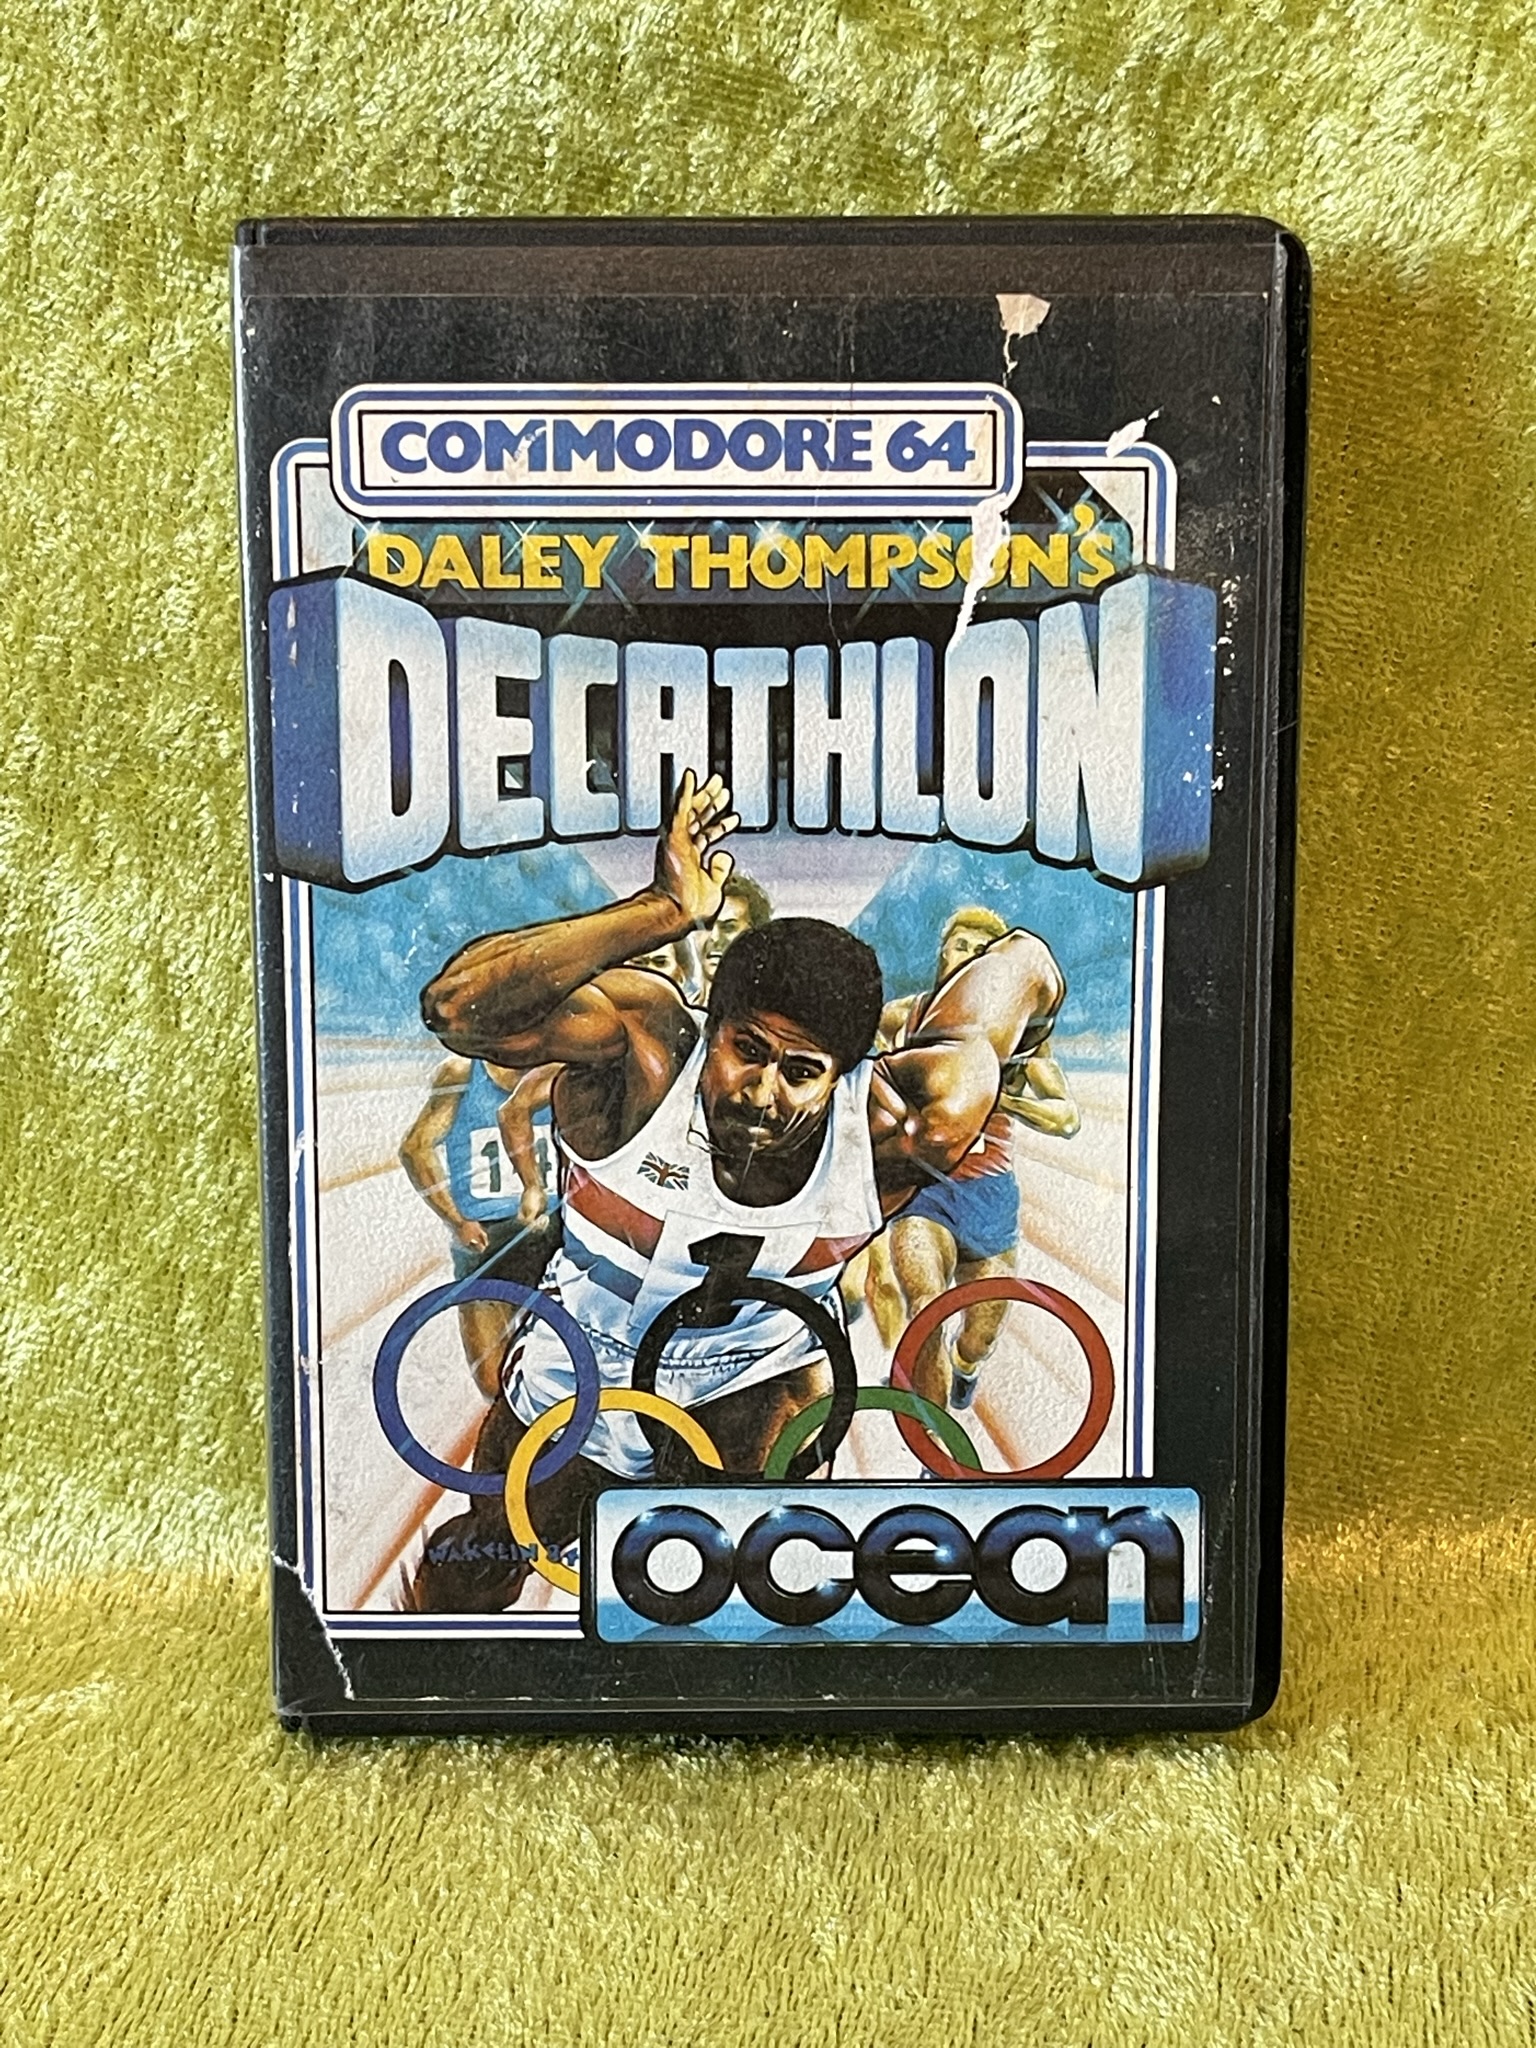 Daley Thomson's Decathlon